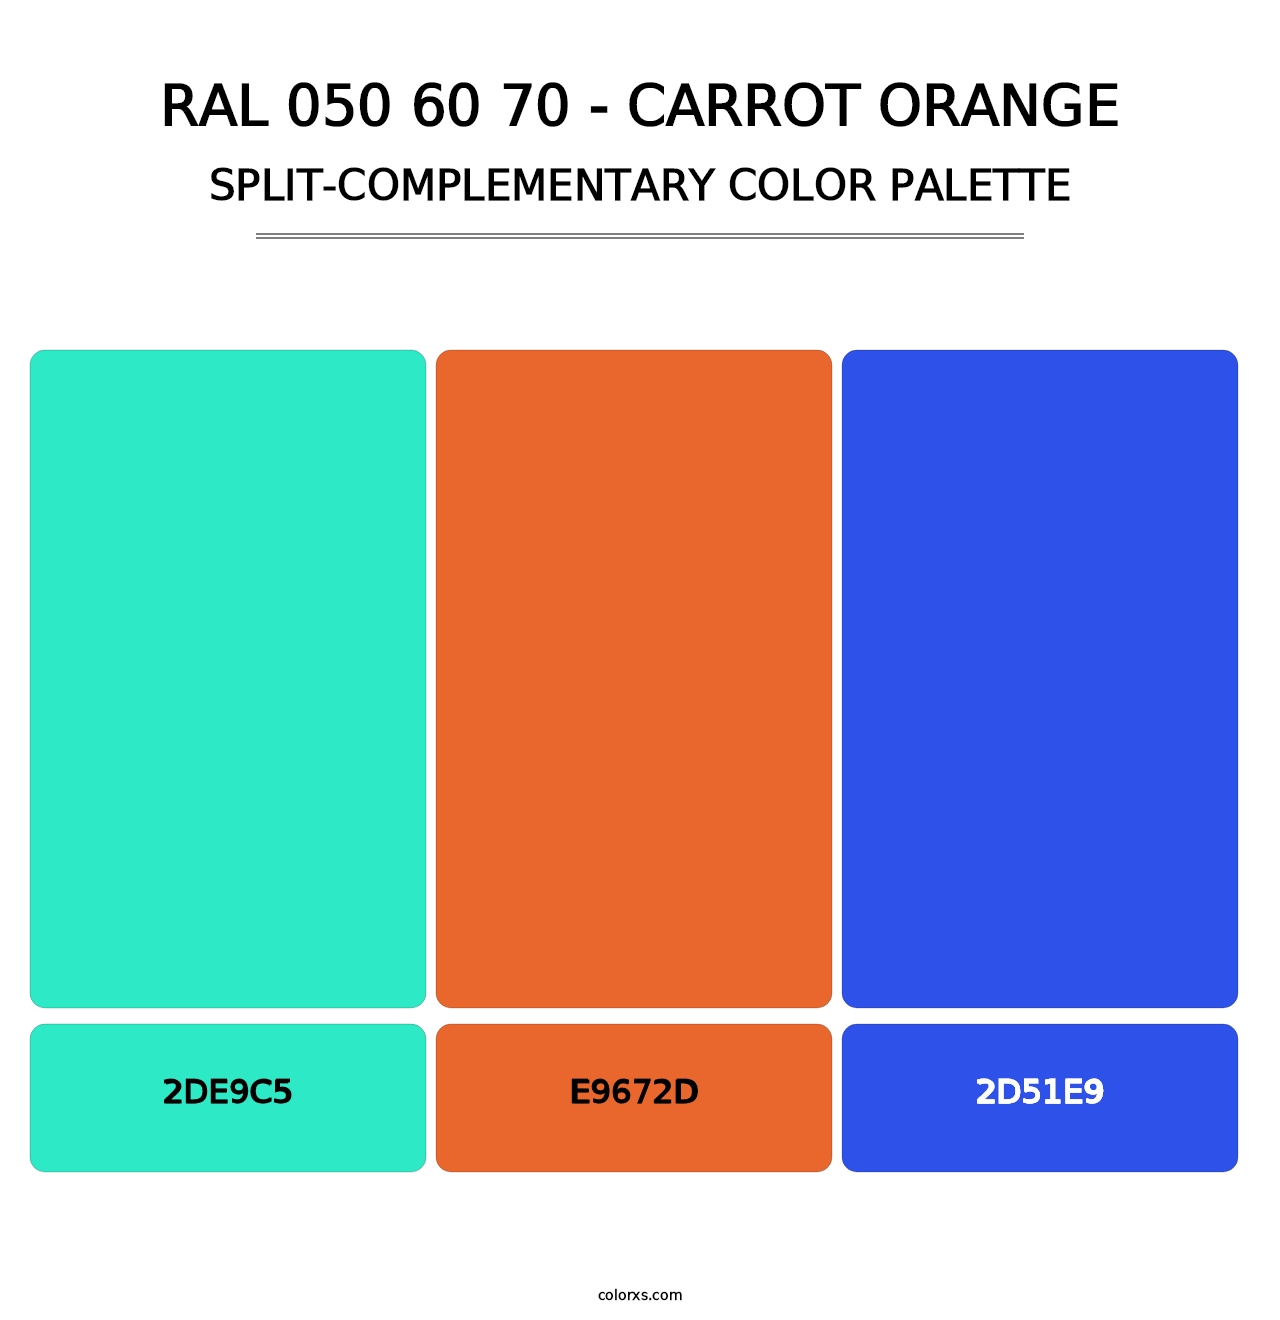 RAL 050 60 70 - Carrot Orange - Split-Complementary Color Palette